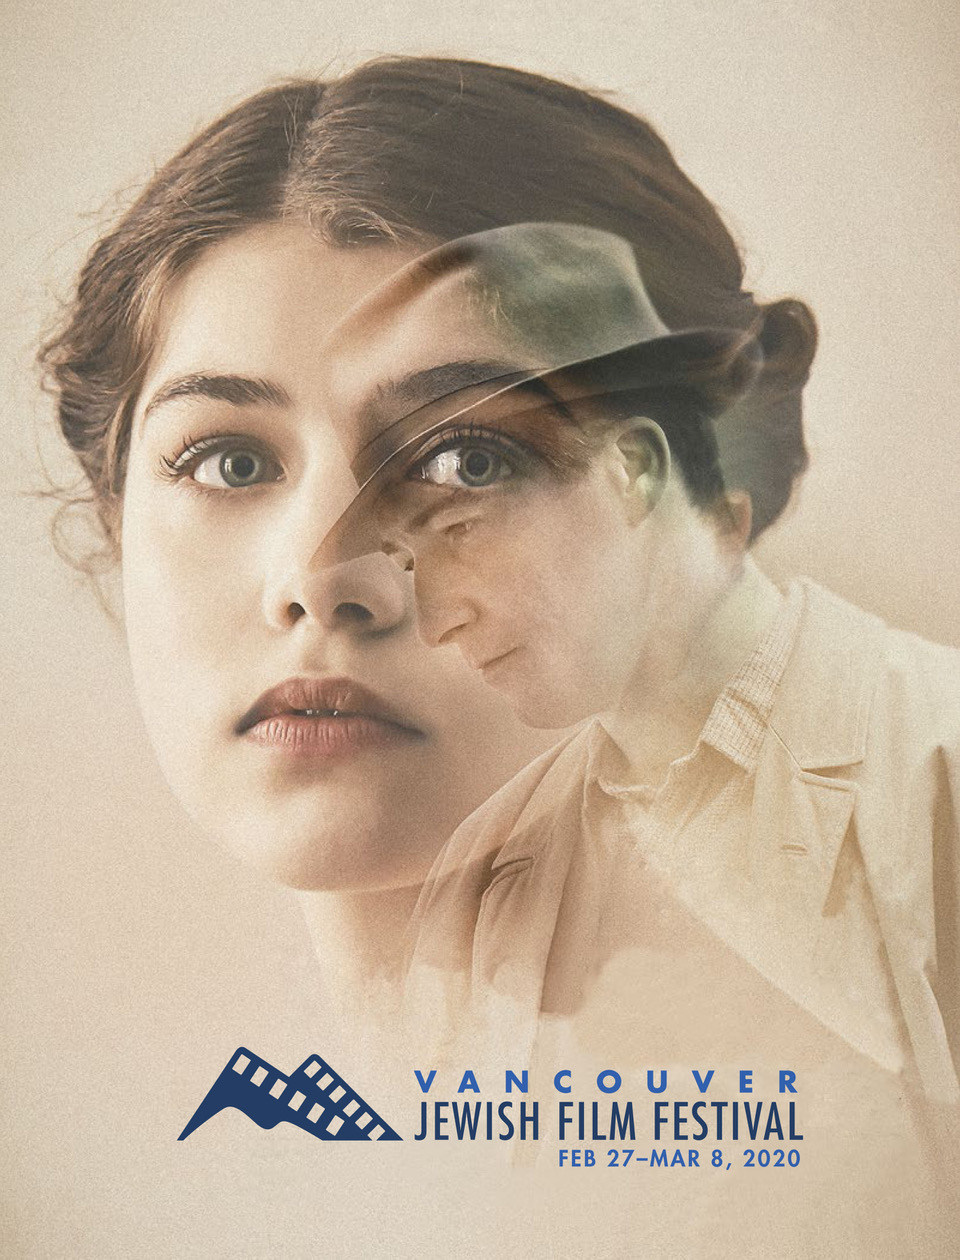 31st Annual Vancouver Jewish Film Festival To Showcase Award-Winning Films